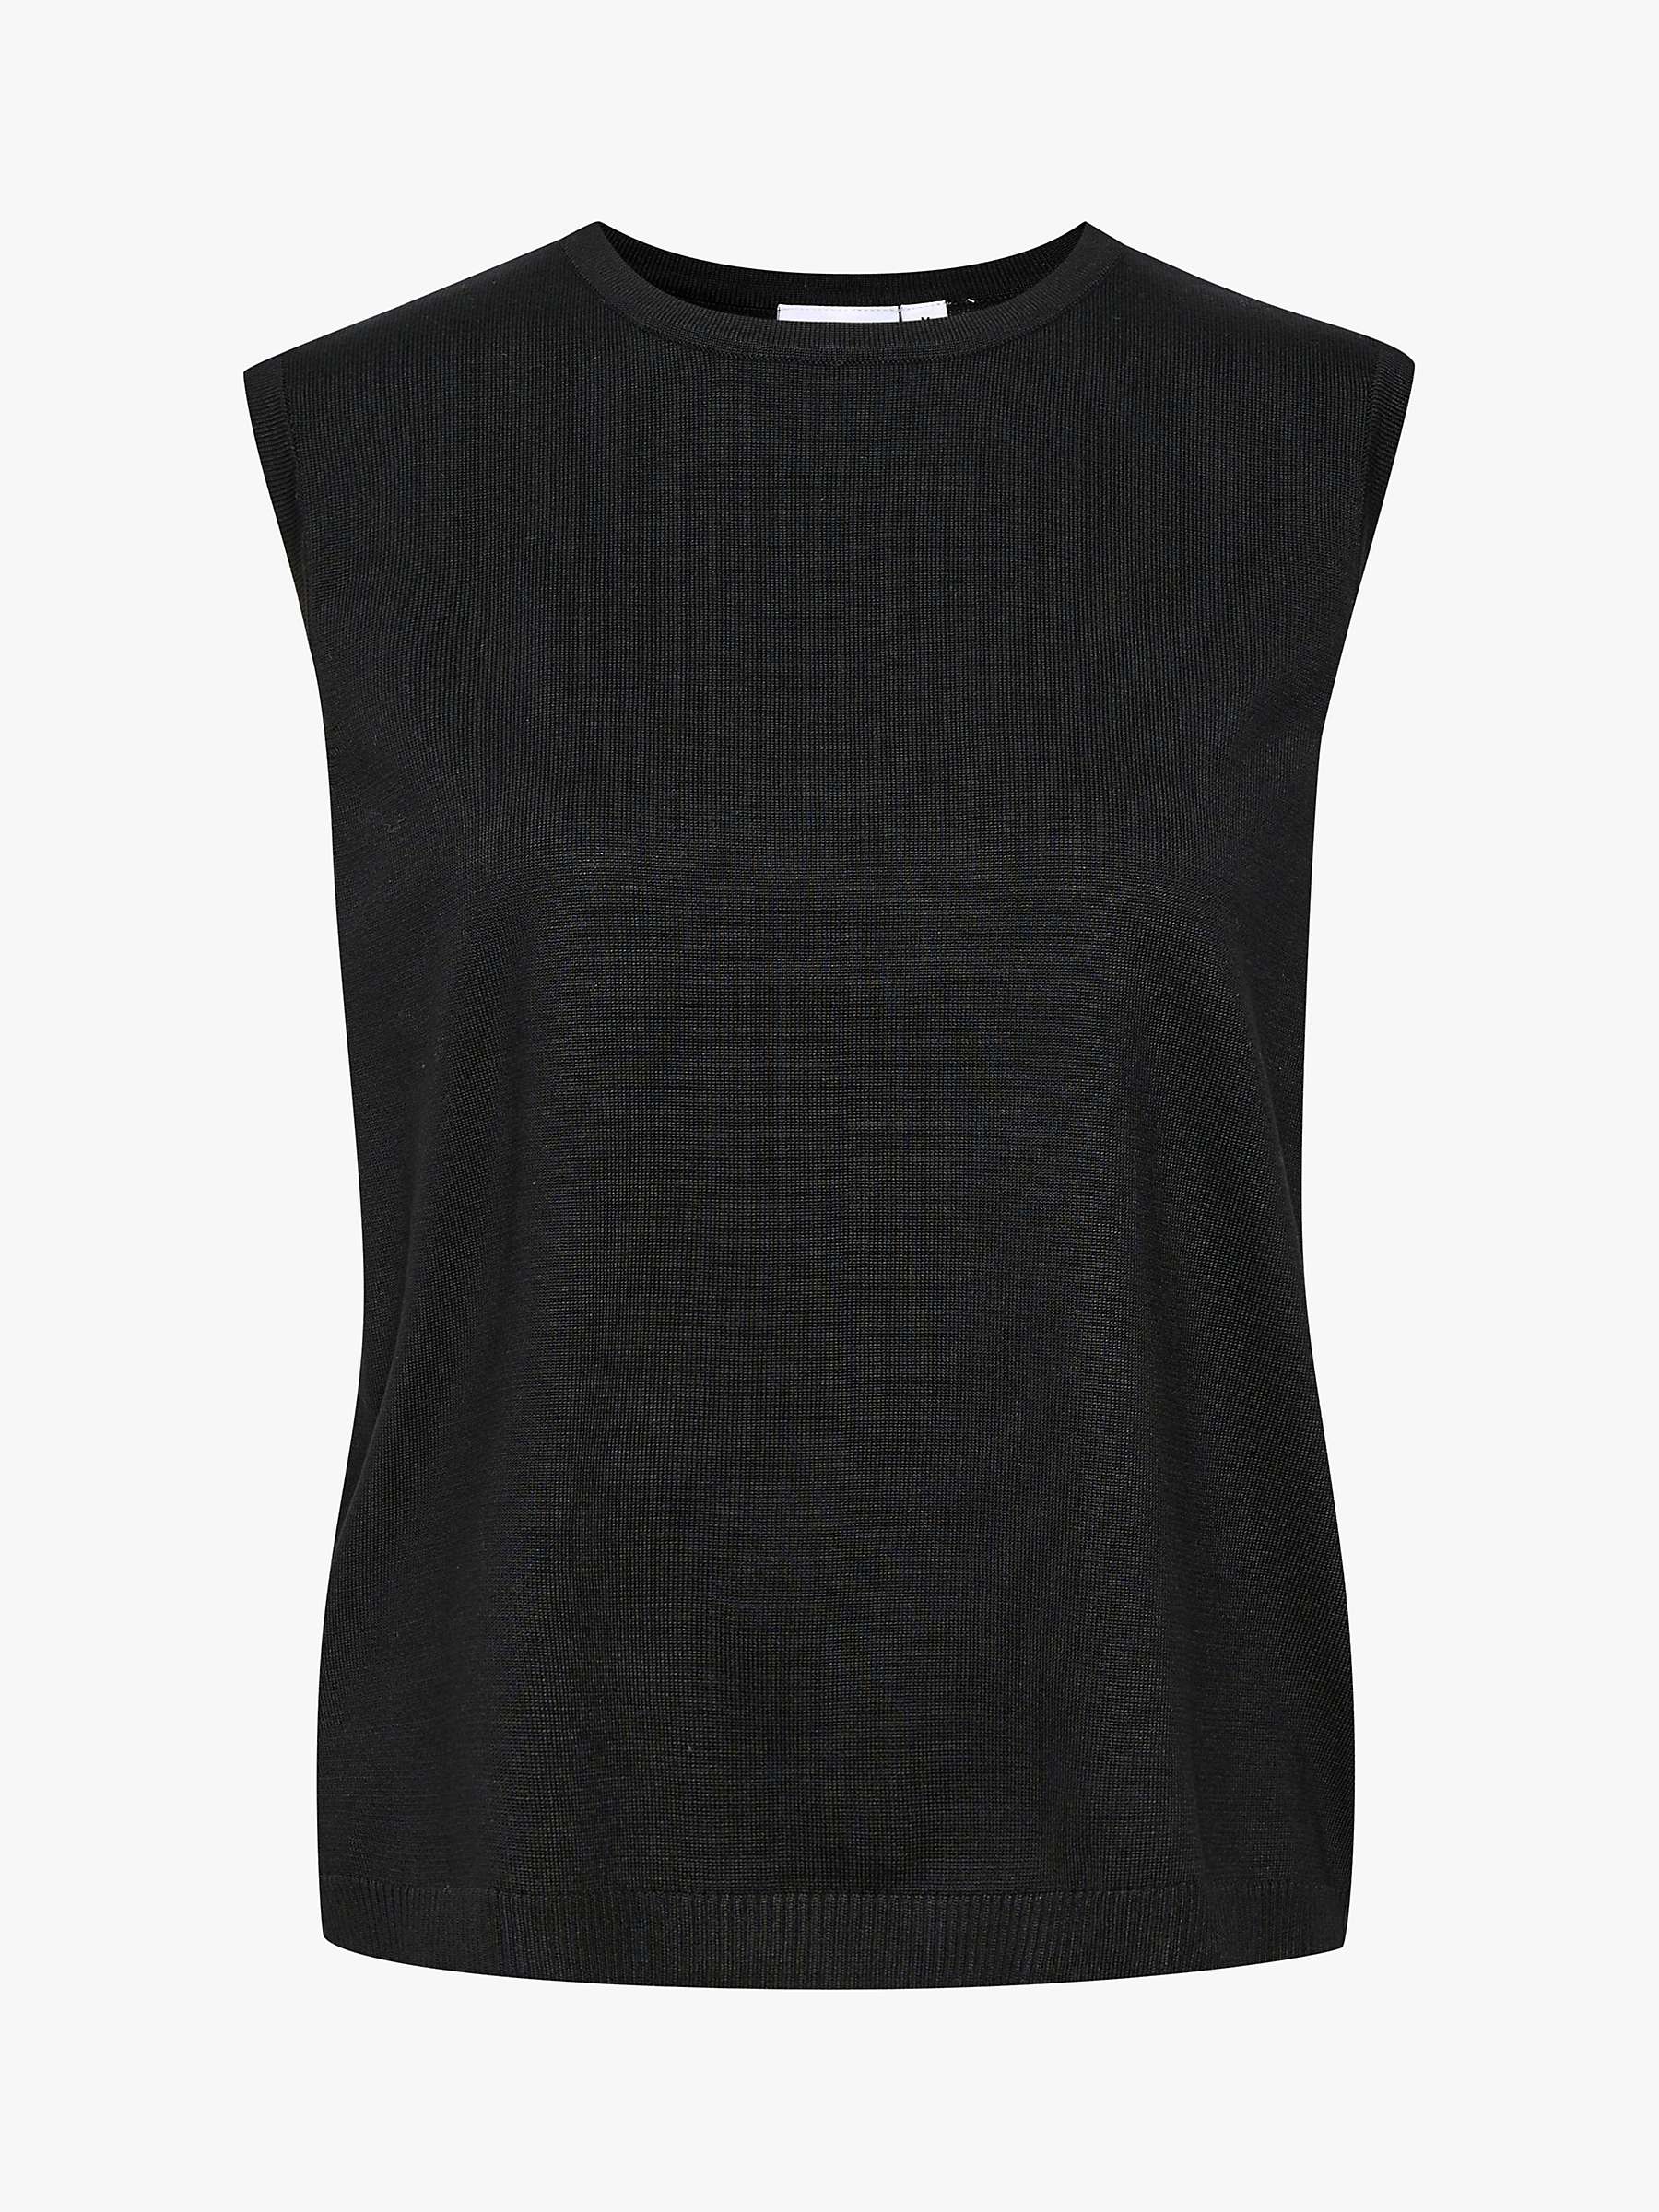 Saint Tropez Mila Knitted Vest Top, Black at John Lewis & Partners